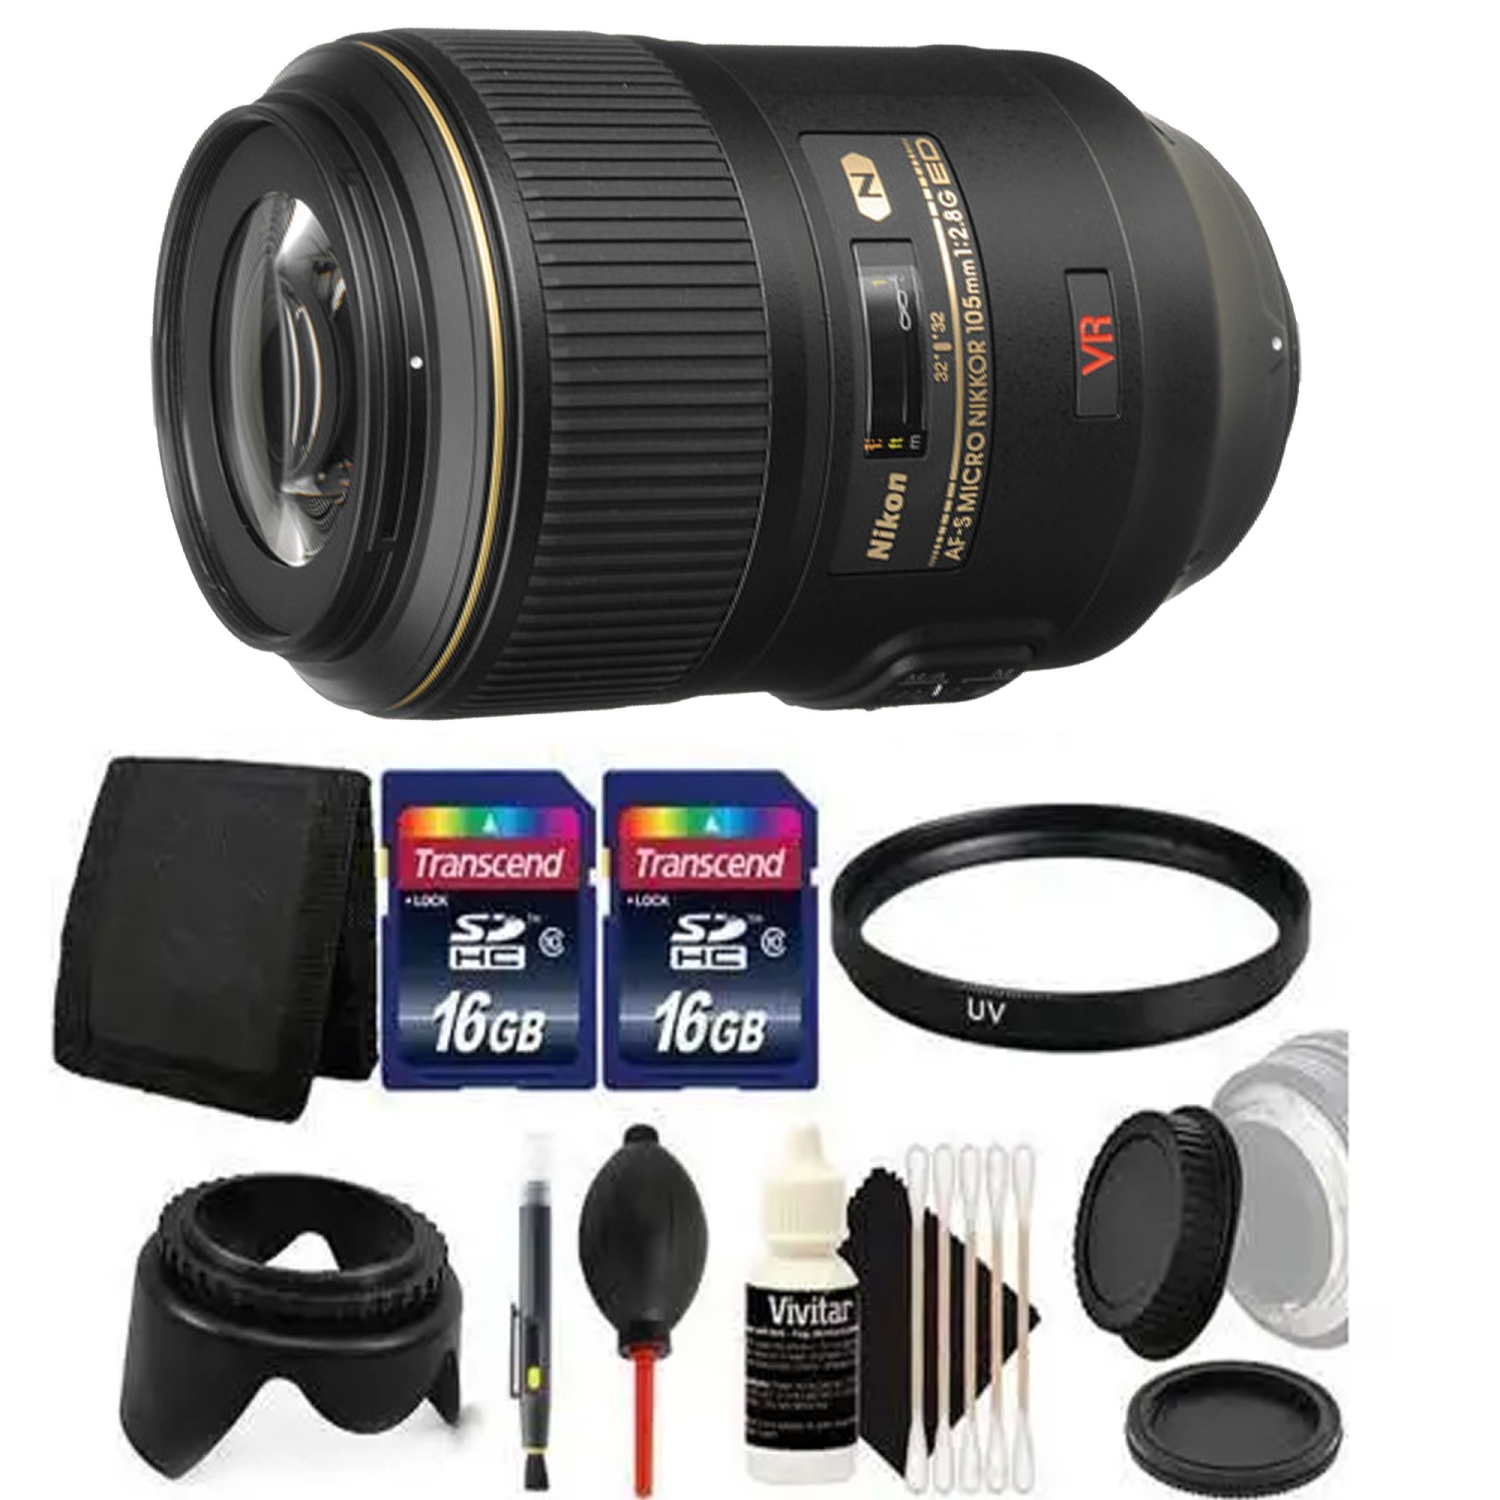 Nikon AF-S VR Micro 105mm F/2.8G IF-ED Lens W Accessory Kit - US Version w/ Seller Warranty